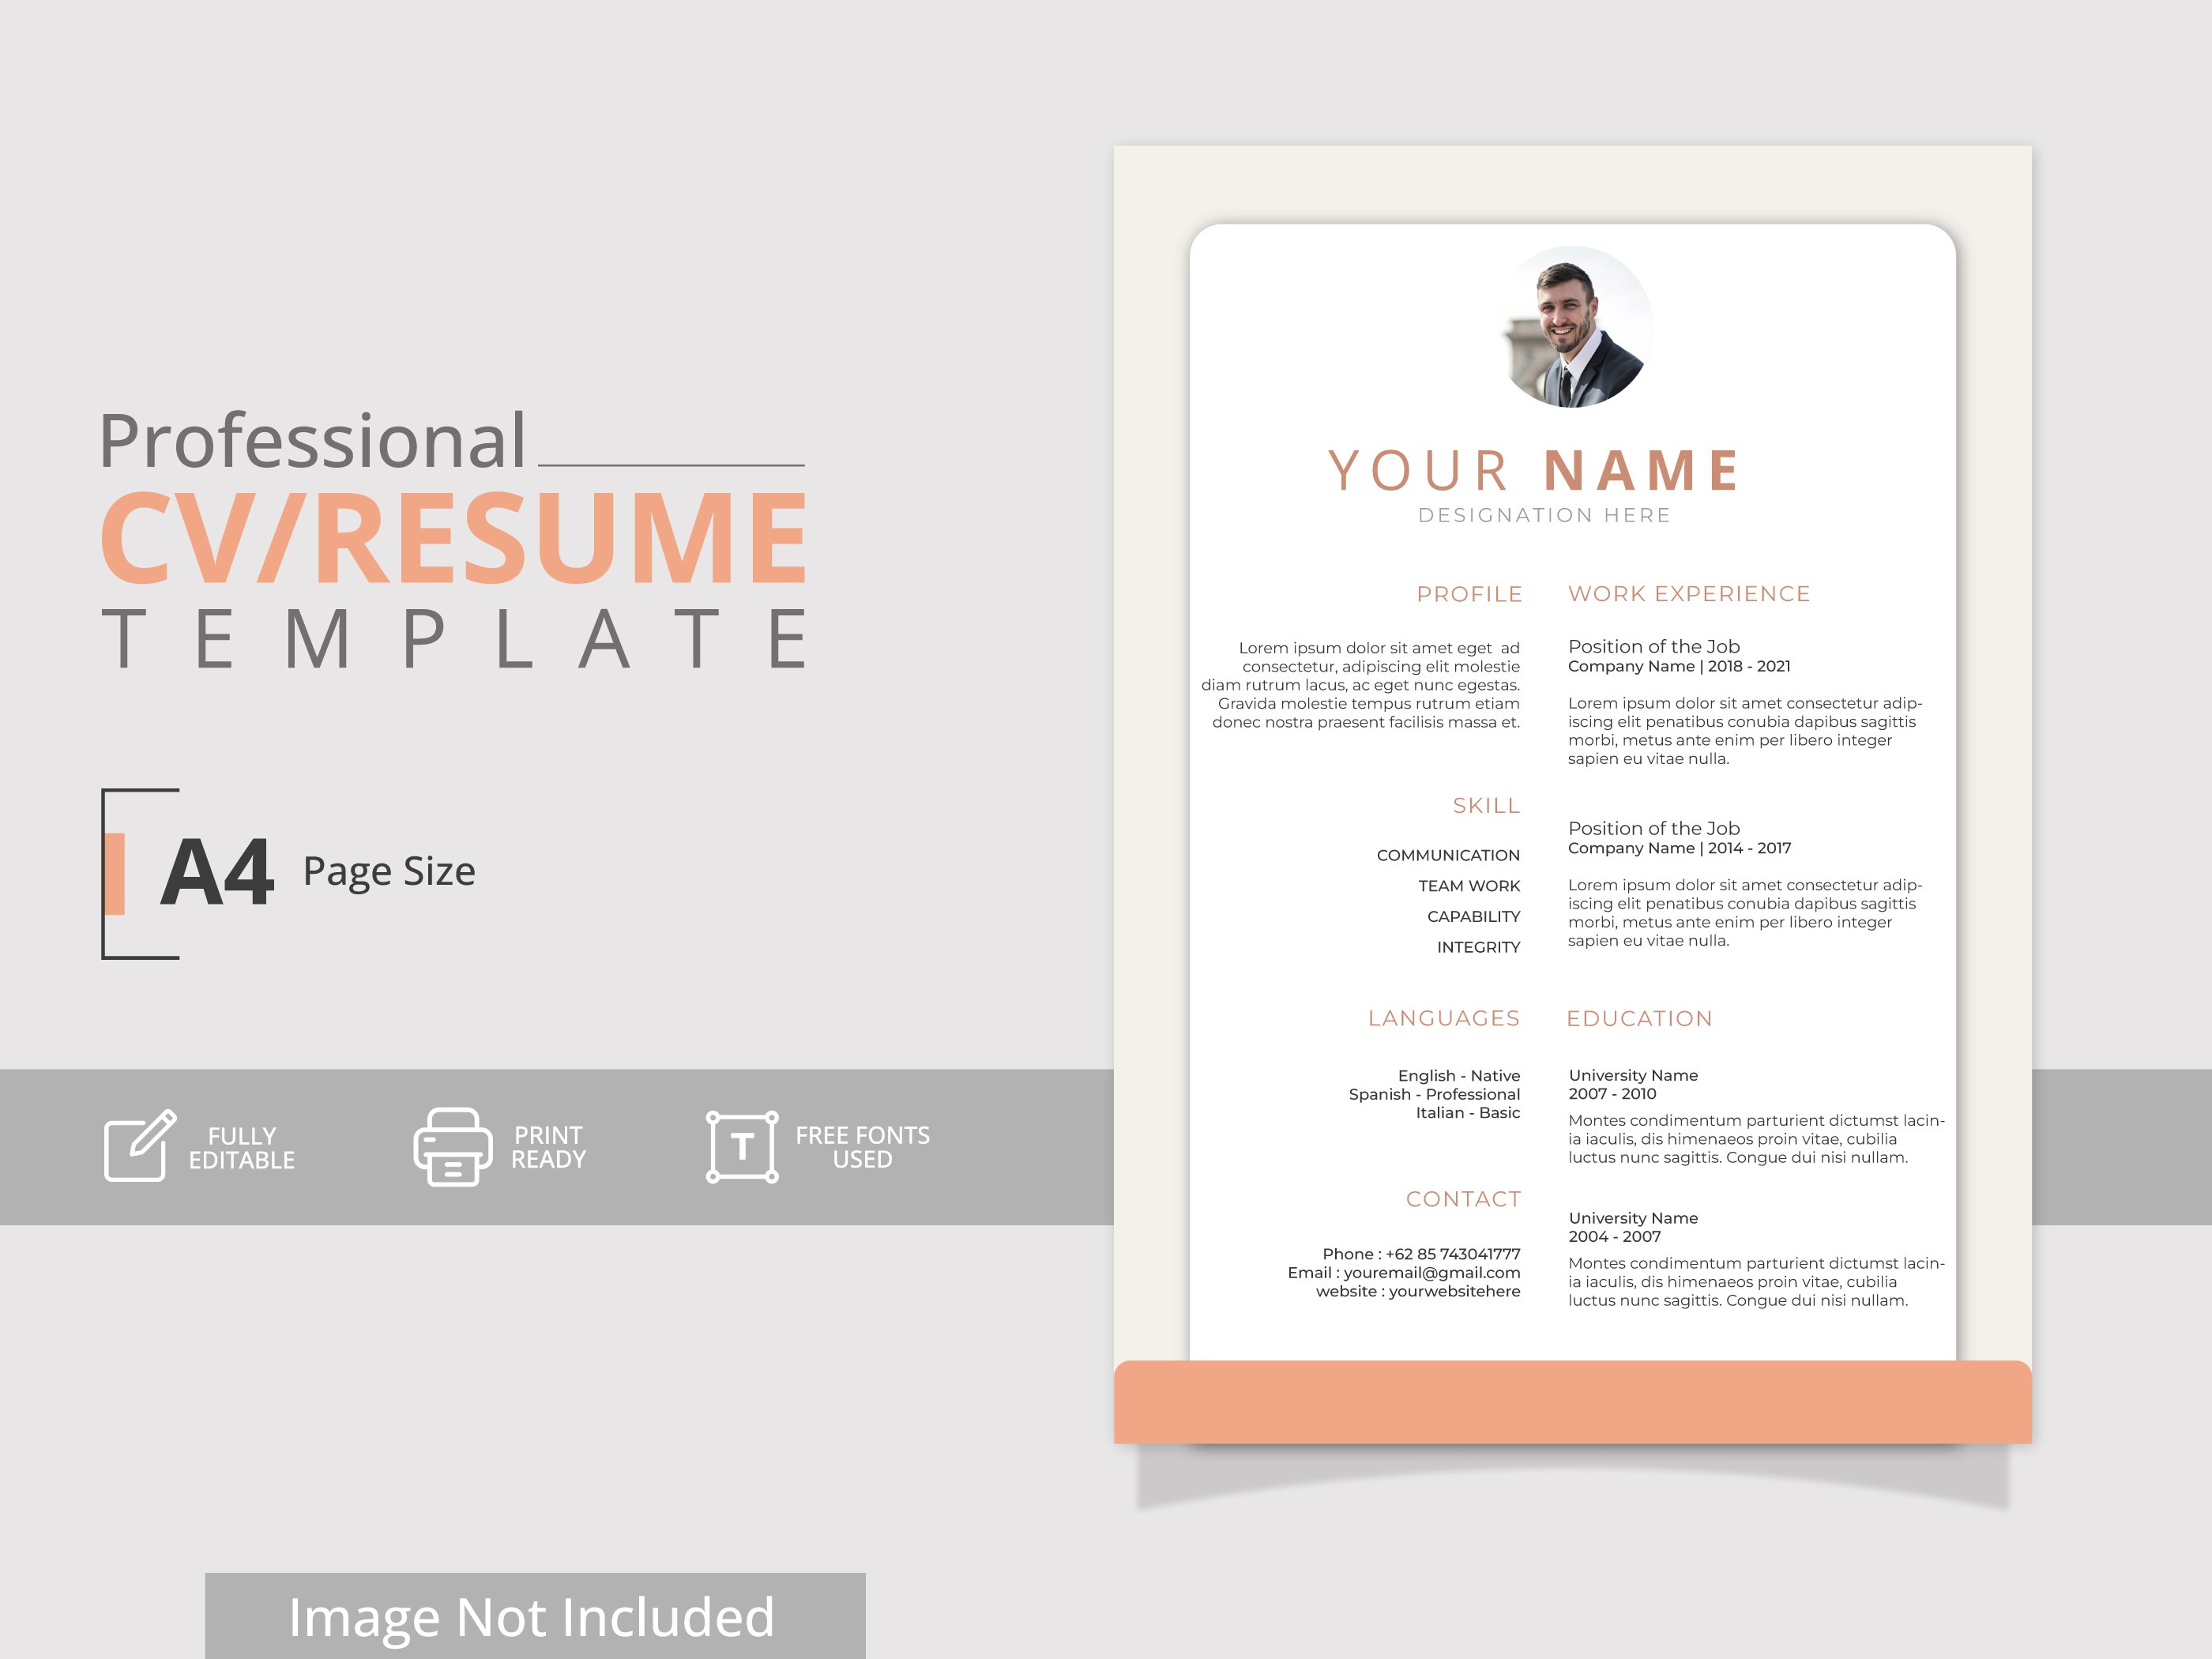 Editable Print Ready CV or Resume cover image.